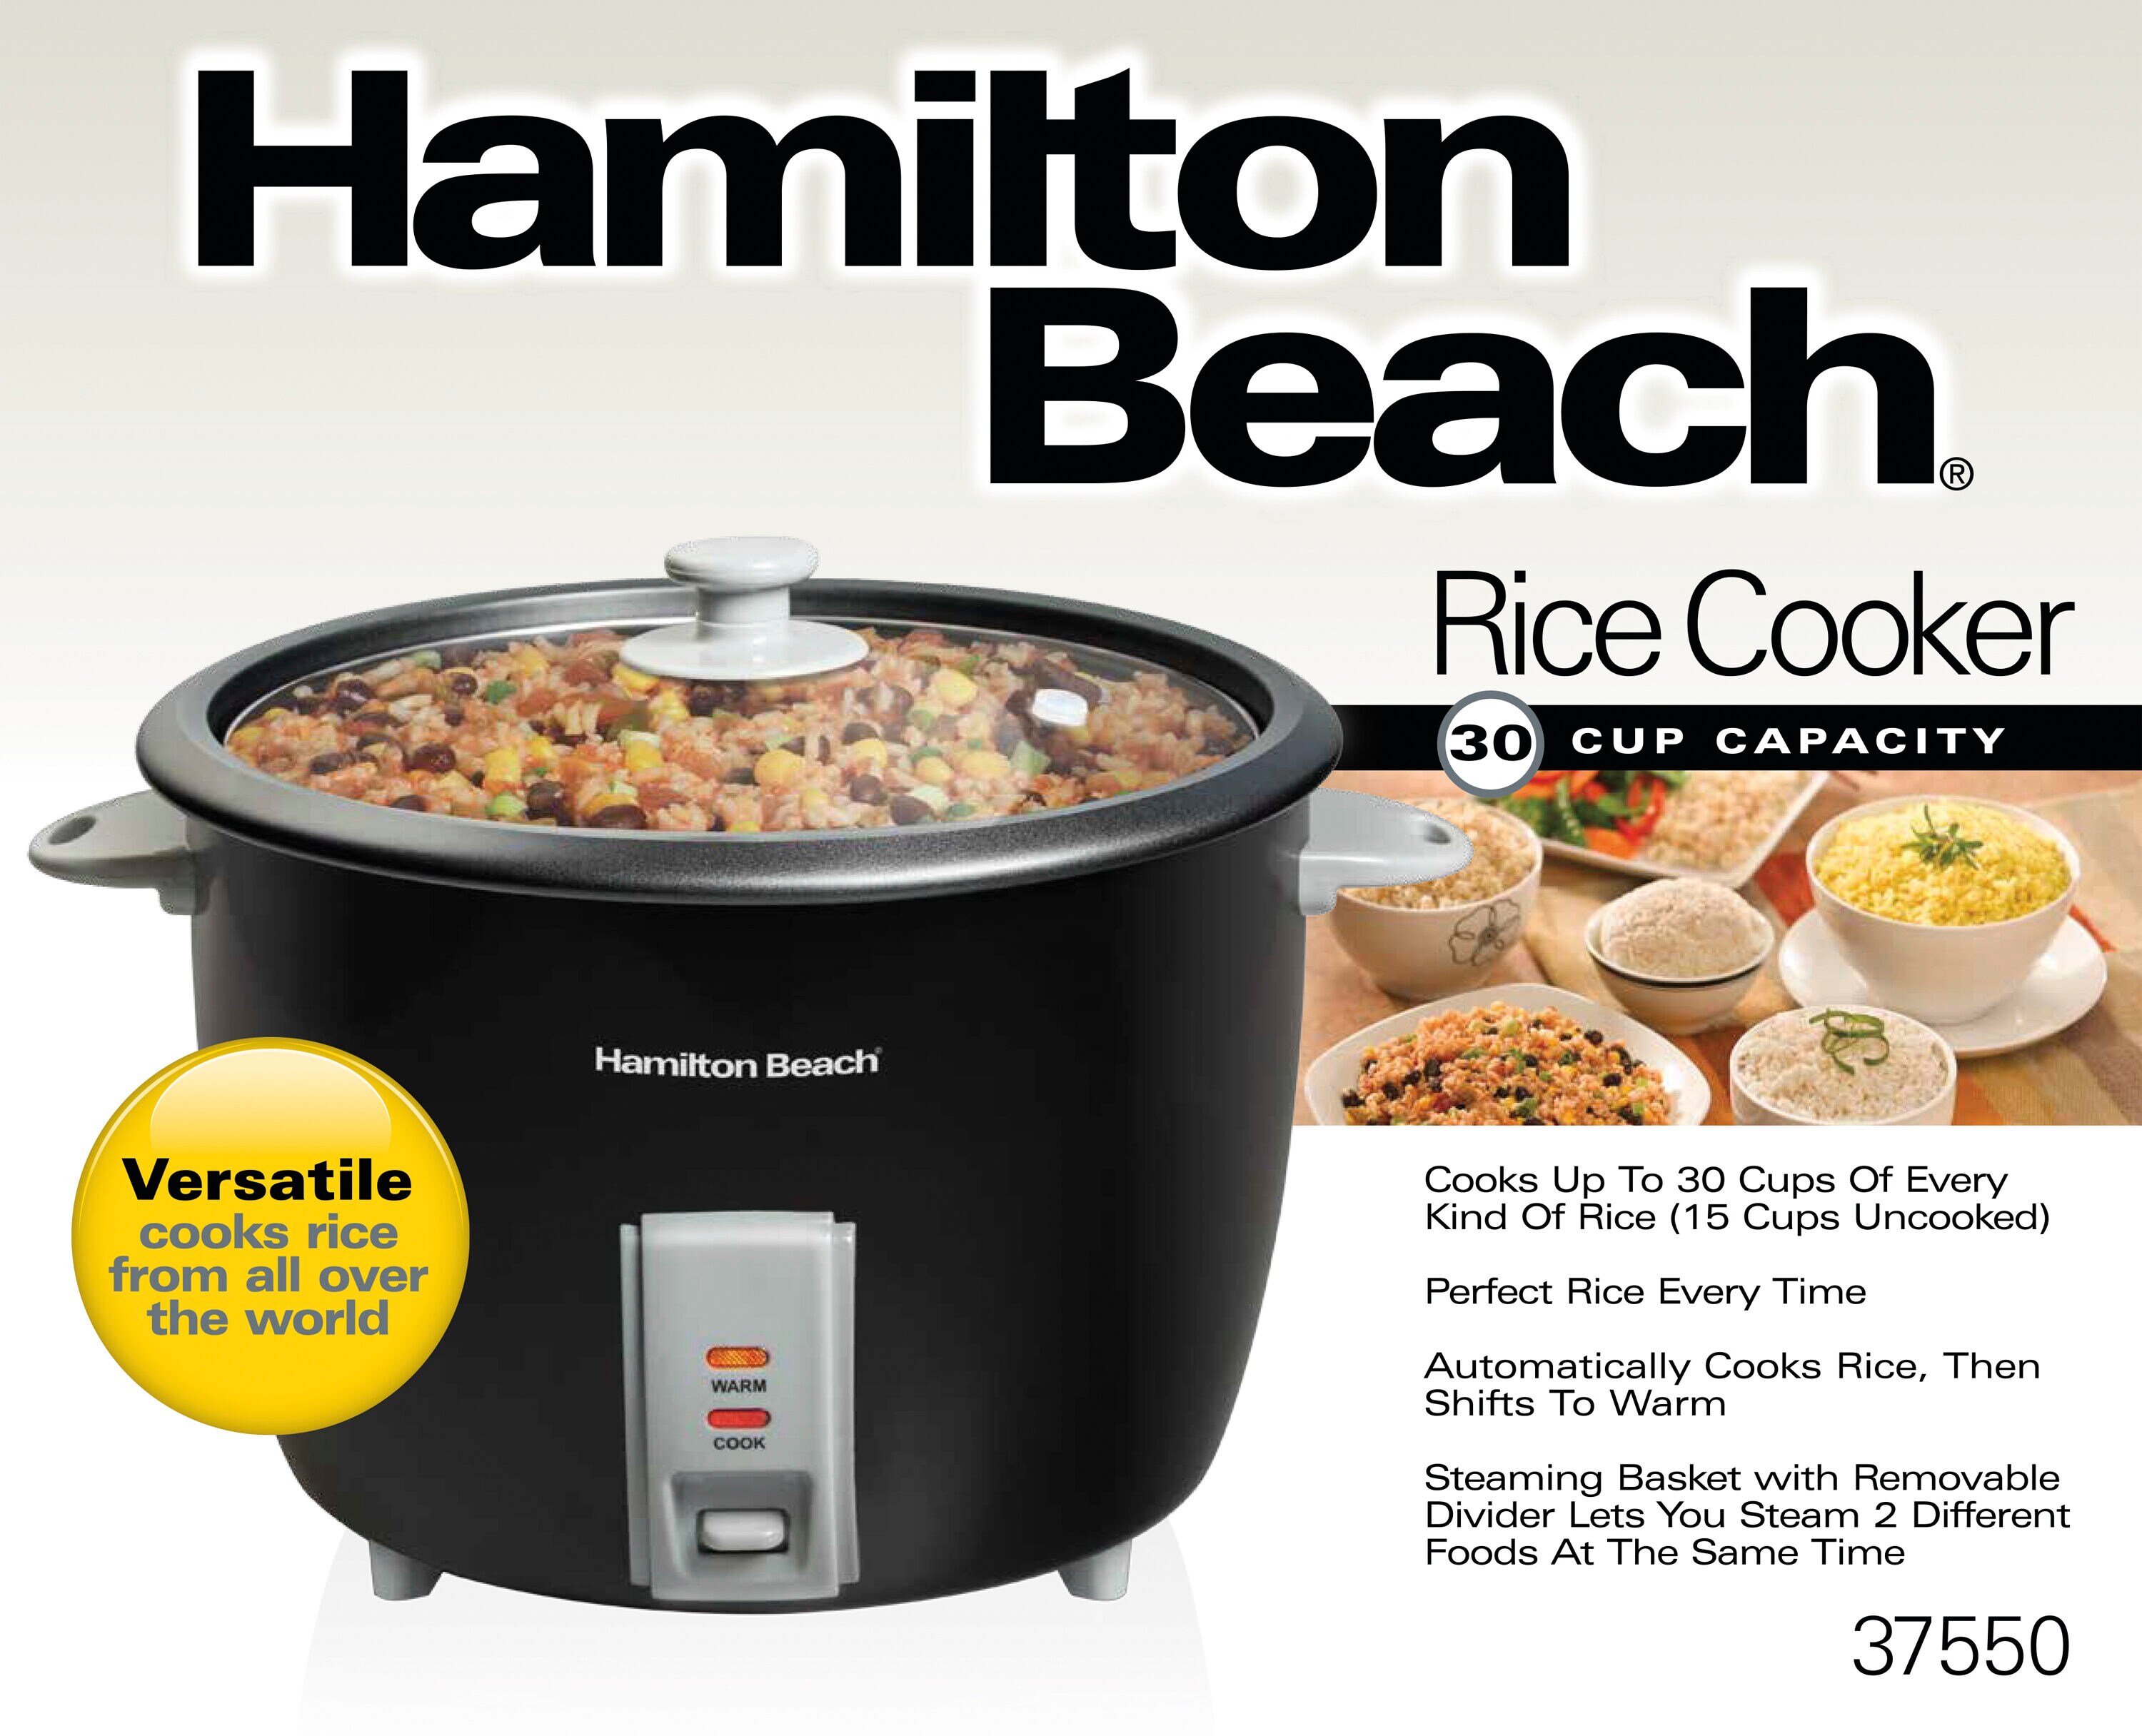 Hamilton Beach Rice Cooker & Steamer 1.5L 500W